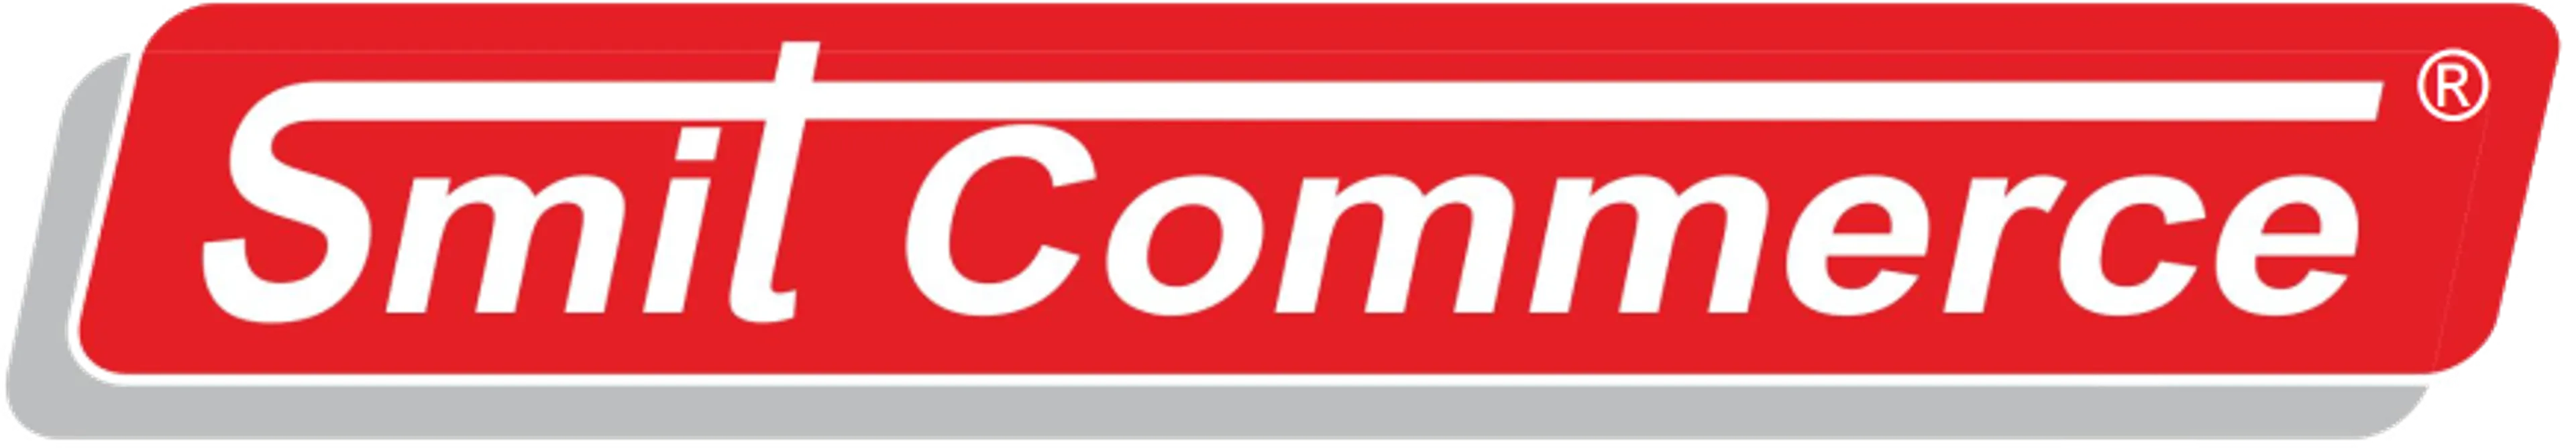 SMIT COMMERCE logo